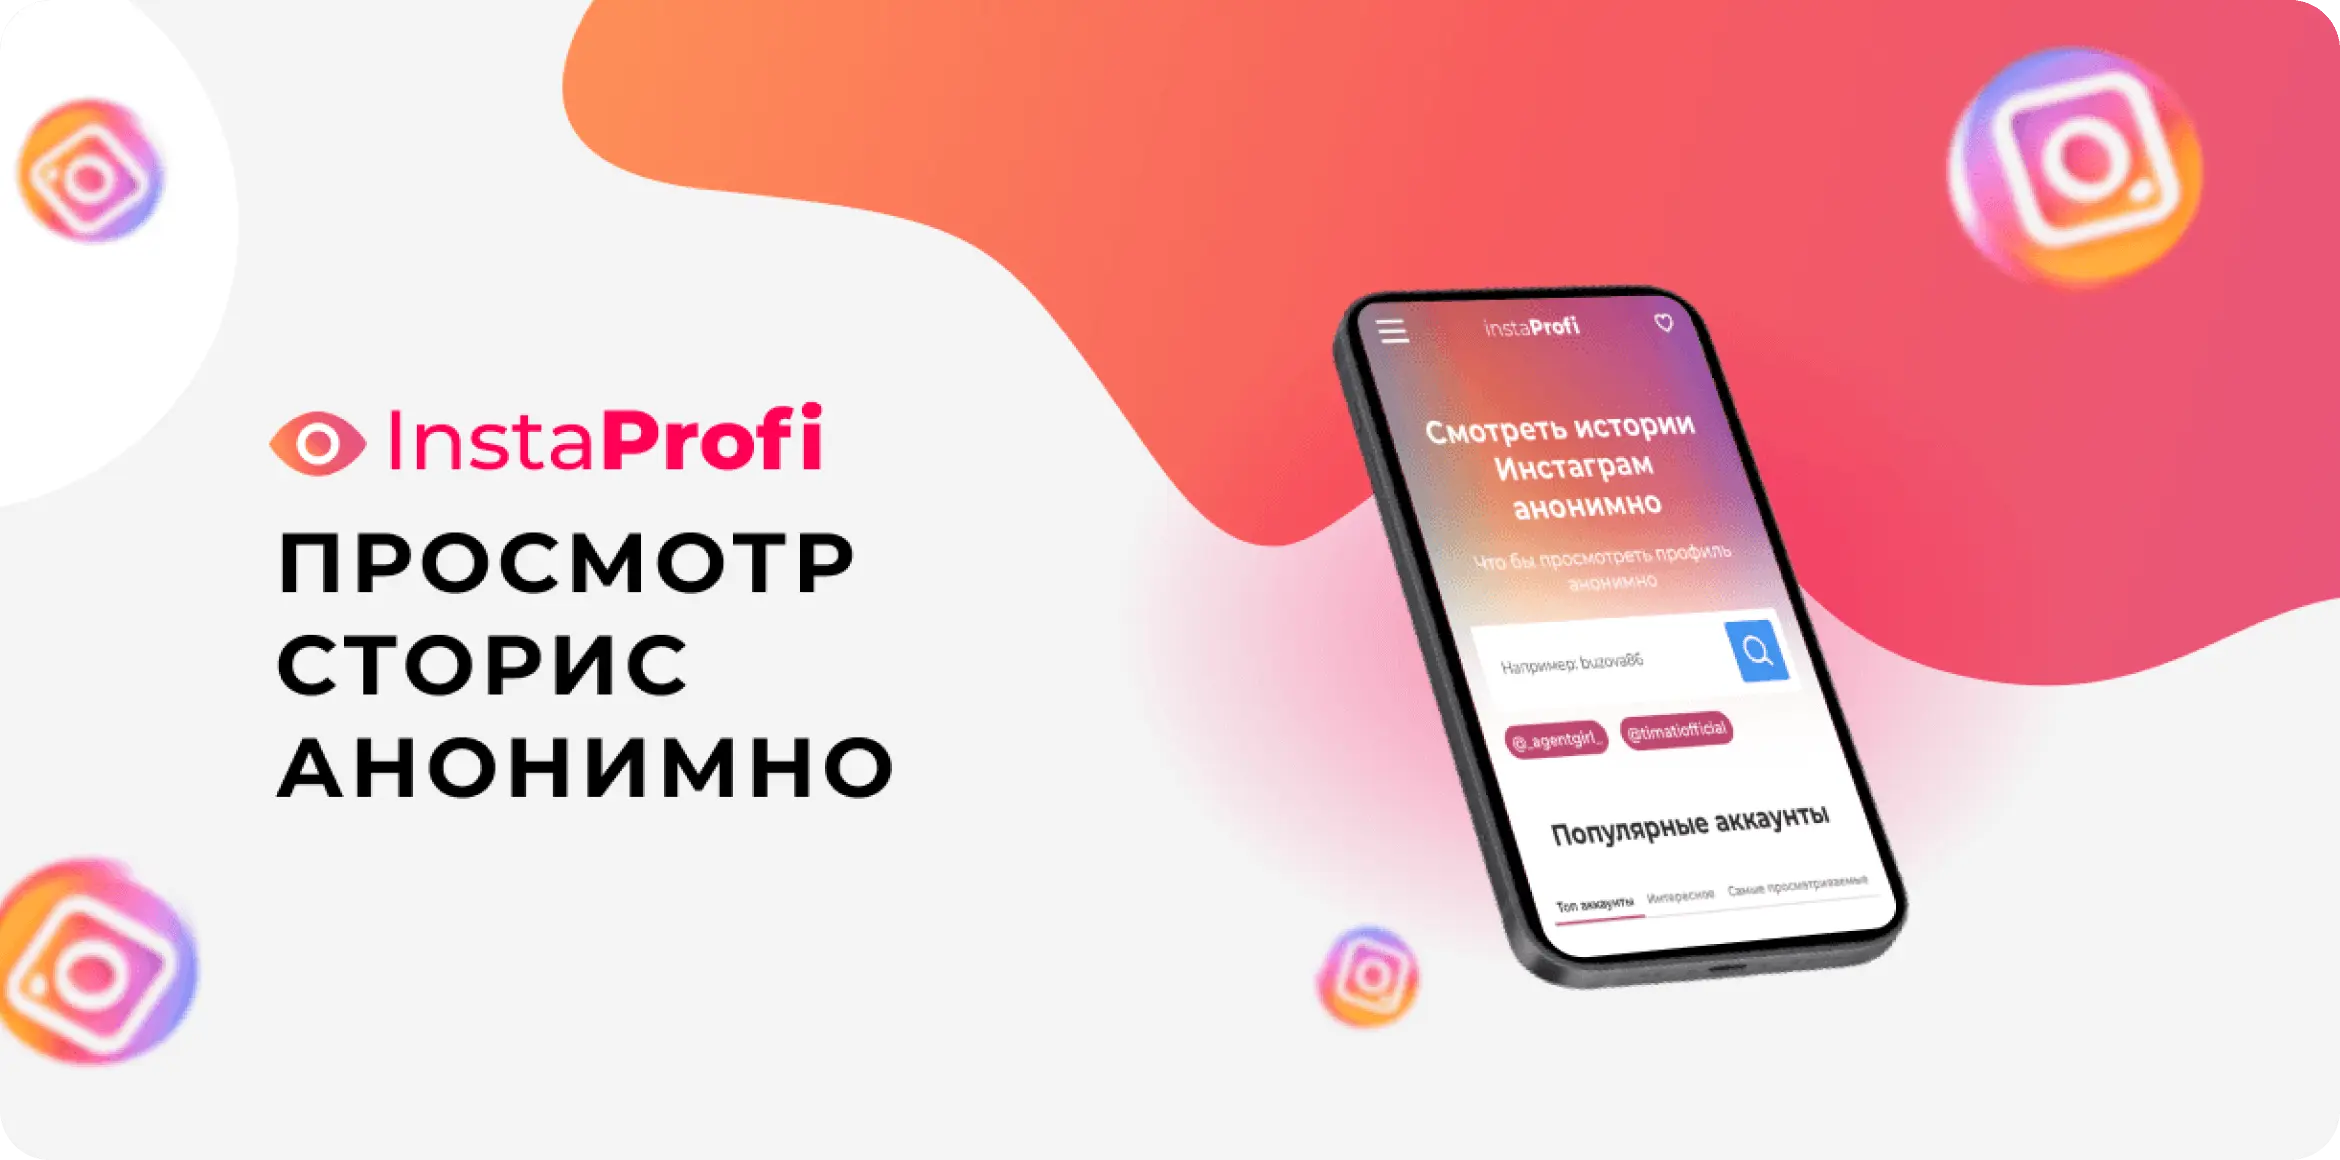 Instaprofi.ru, Instruction preview